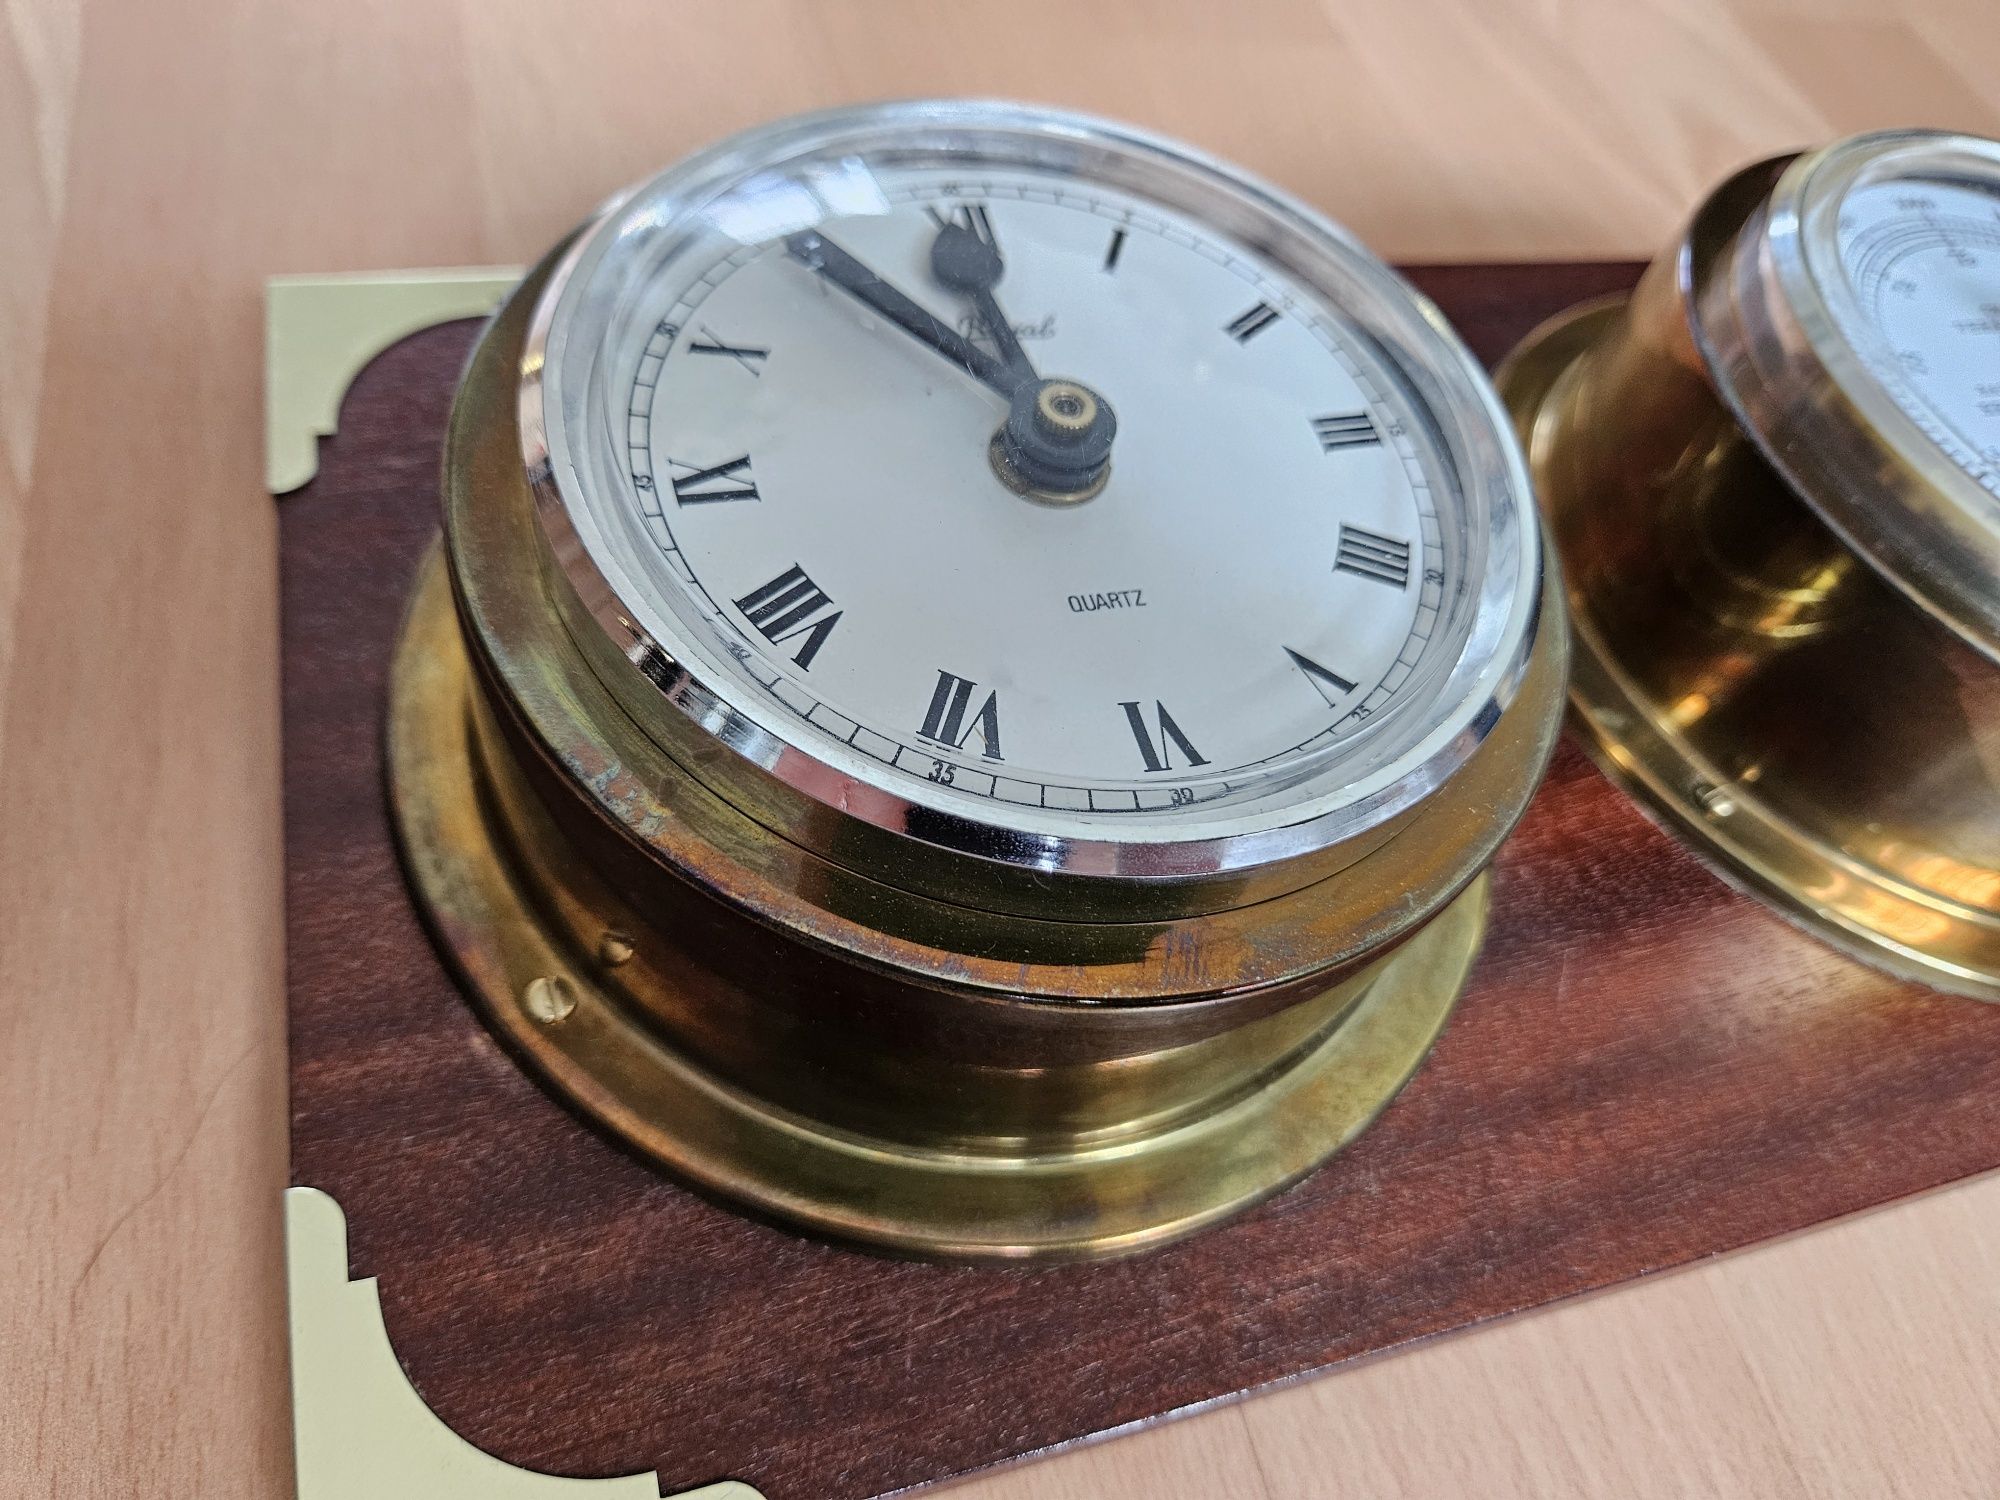 Zegar okrętowy barometr Royal na desce